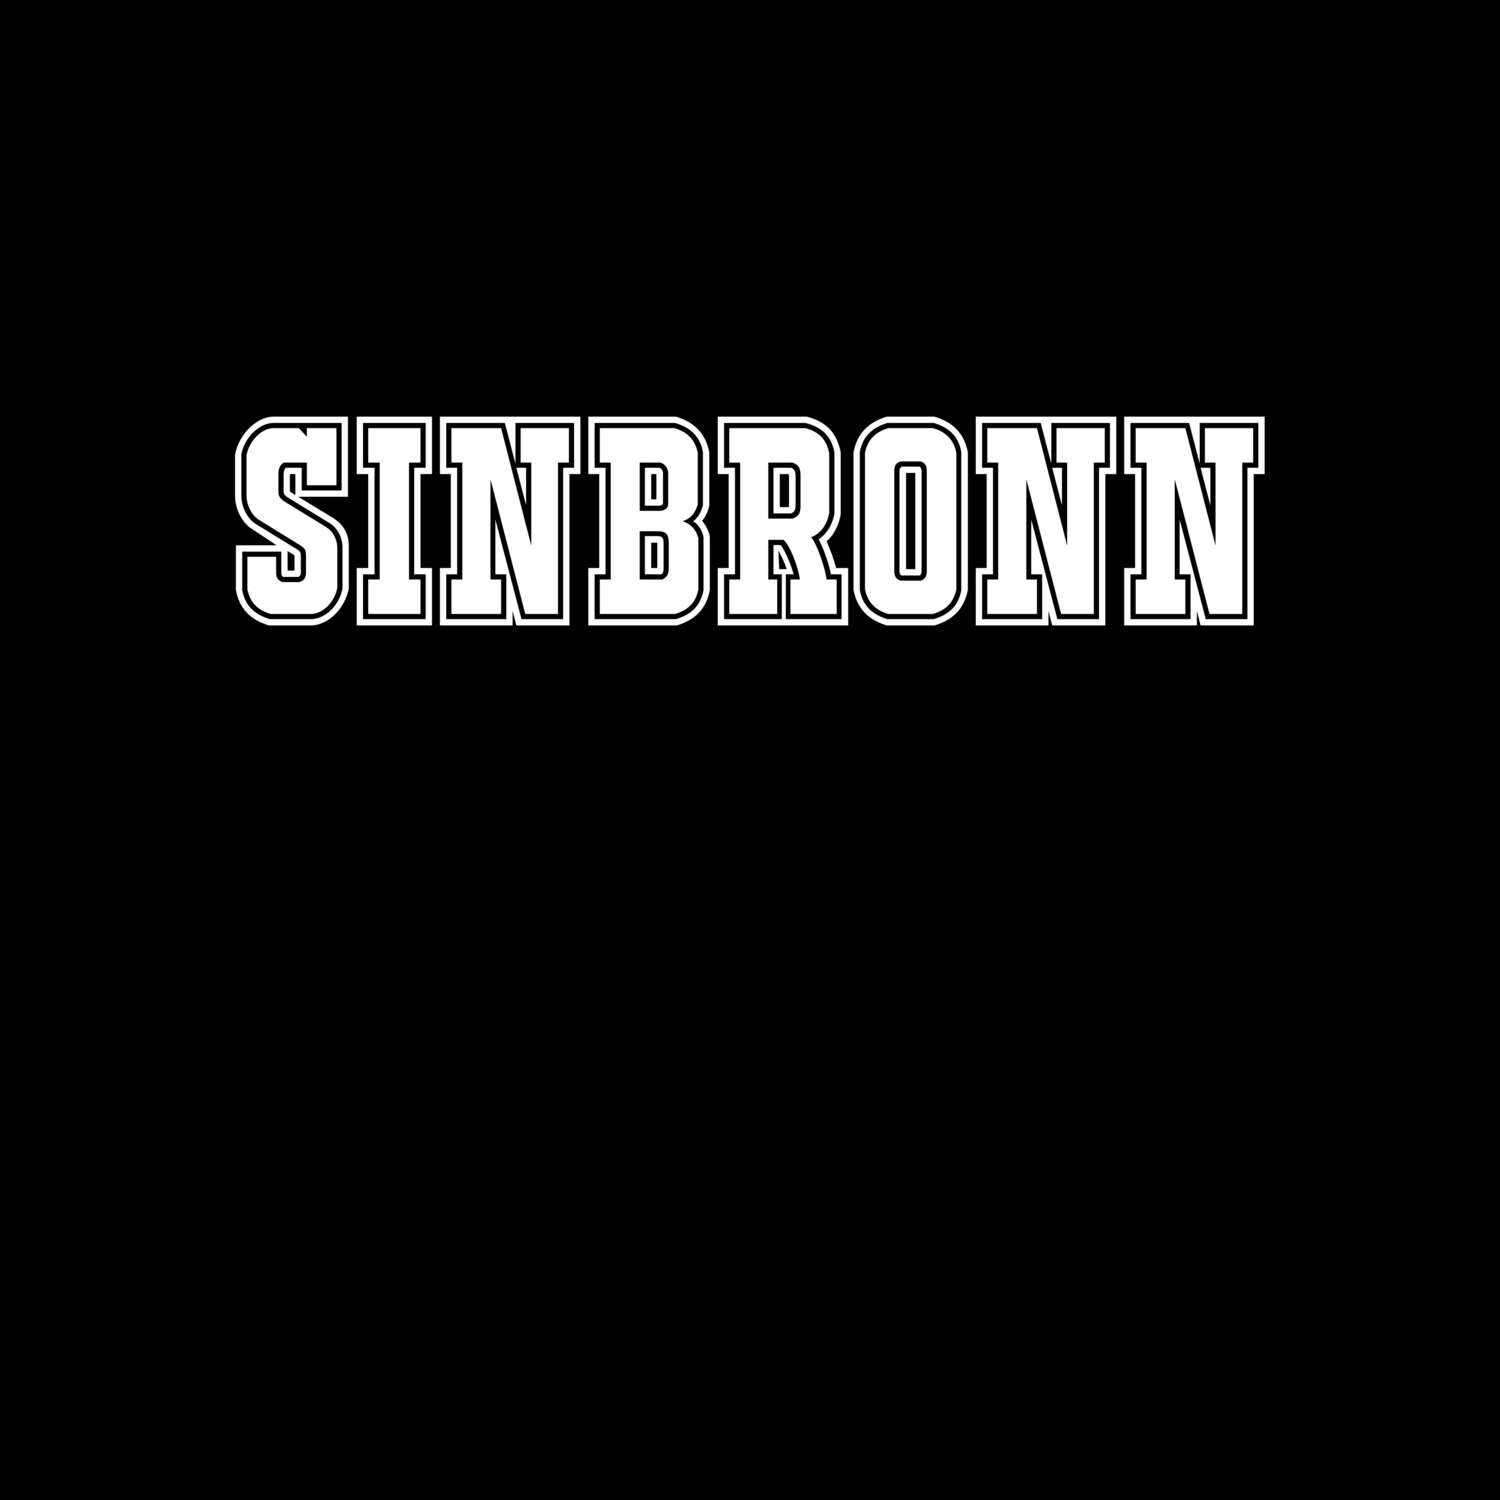 Sinbronn T-Shirt »Classic«